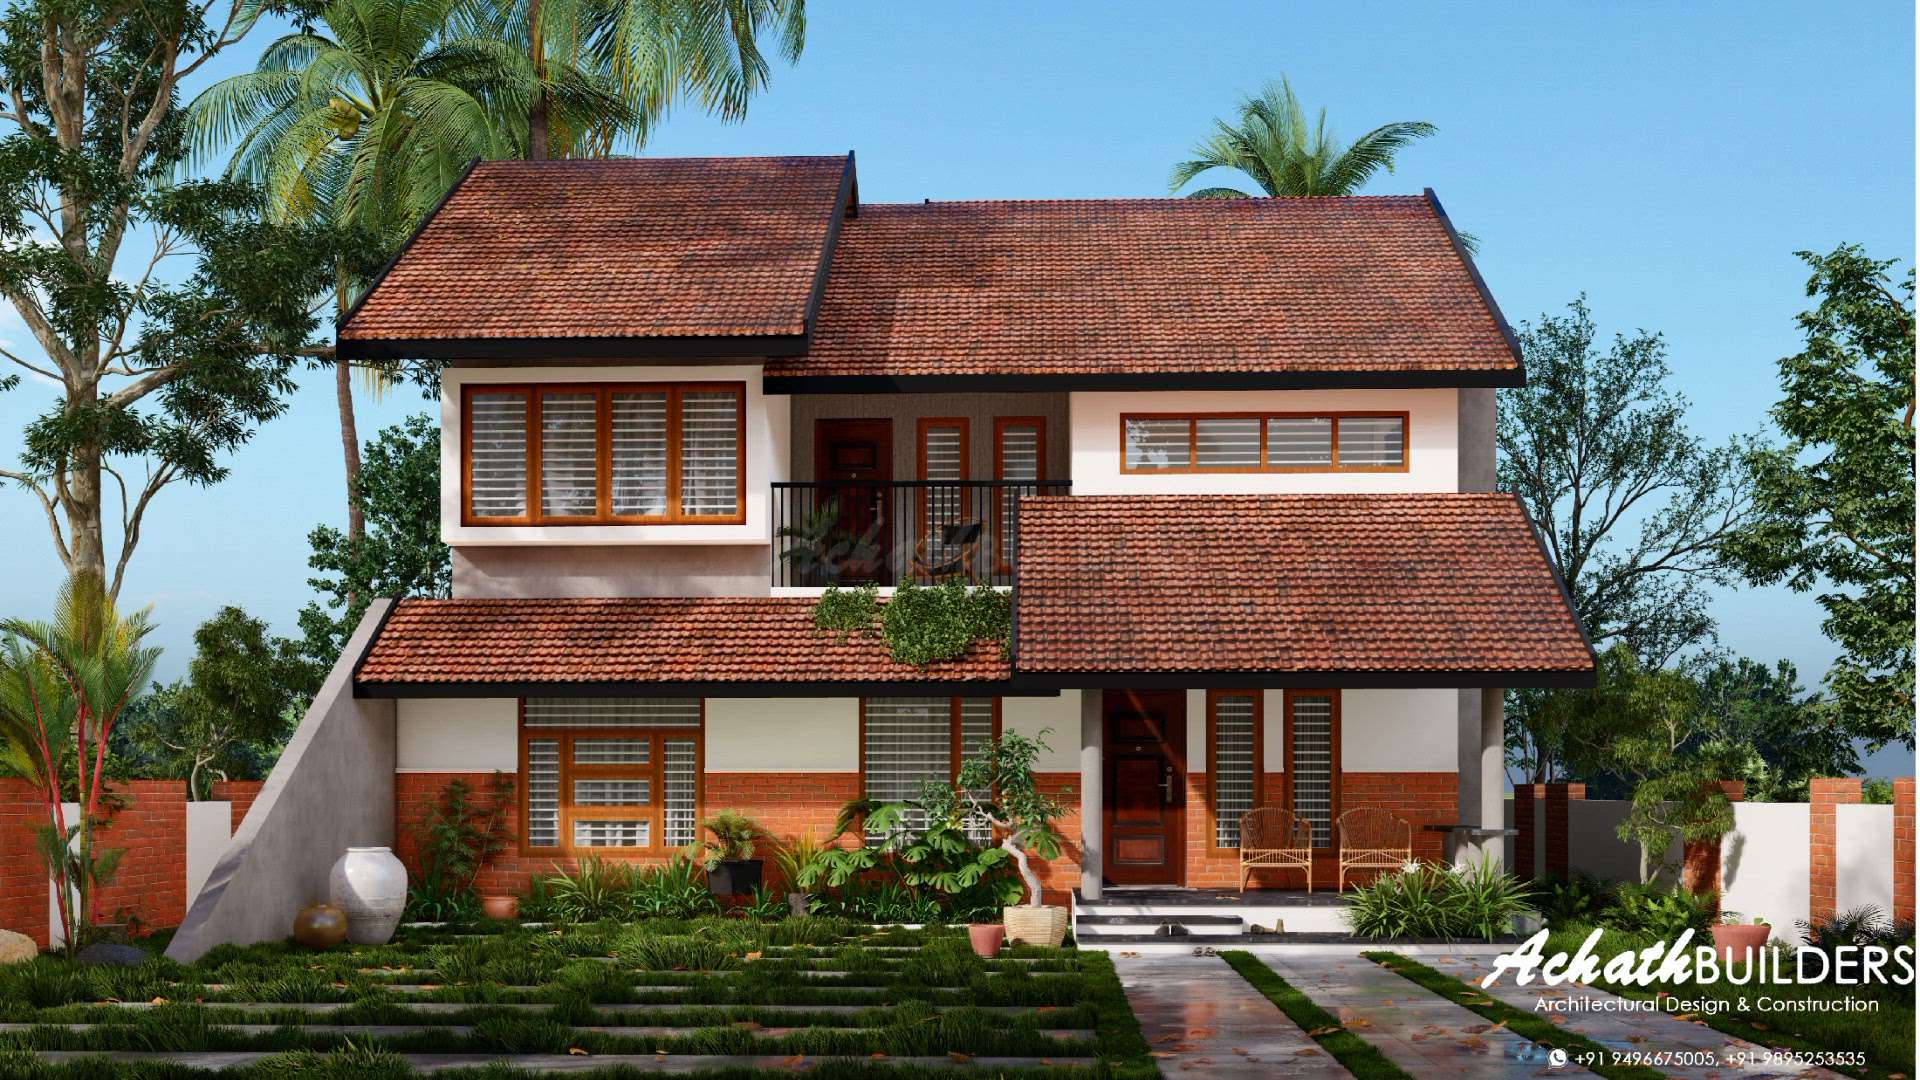 #architecturedesigns #Architectural&Interior #HomeAutomation #Architectural&Interior #KeralaStyleHouse #keralatraditionalmural #keralaarchitectures #malappuramhomes #malappuramdesigner